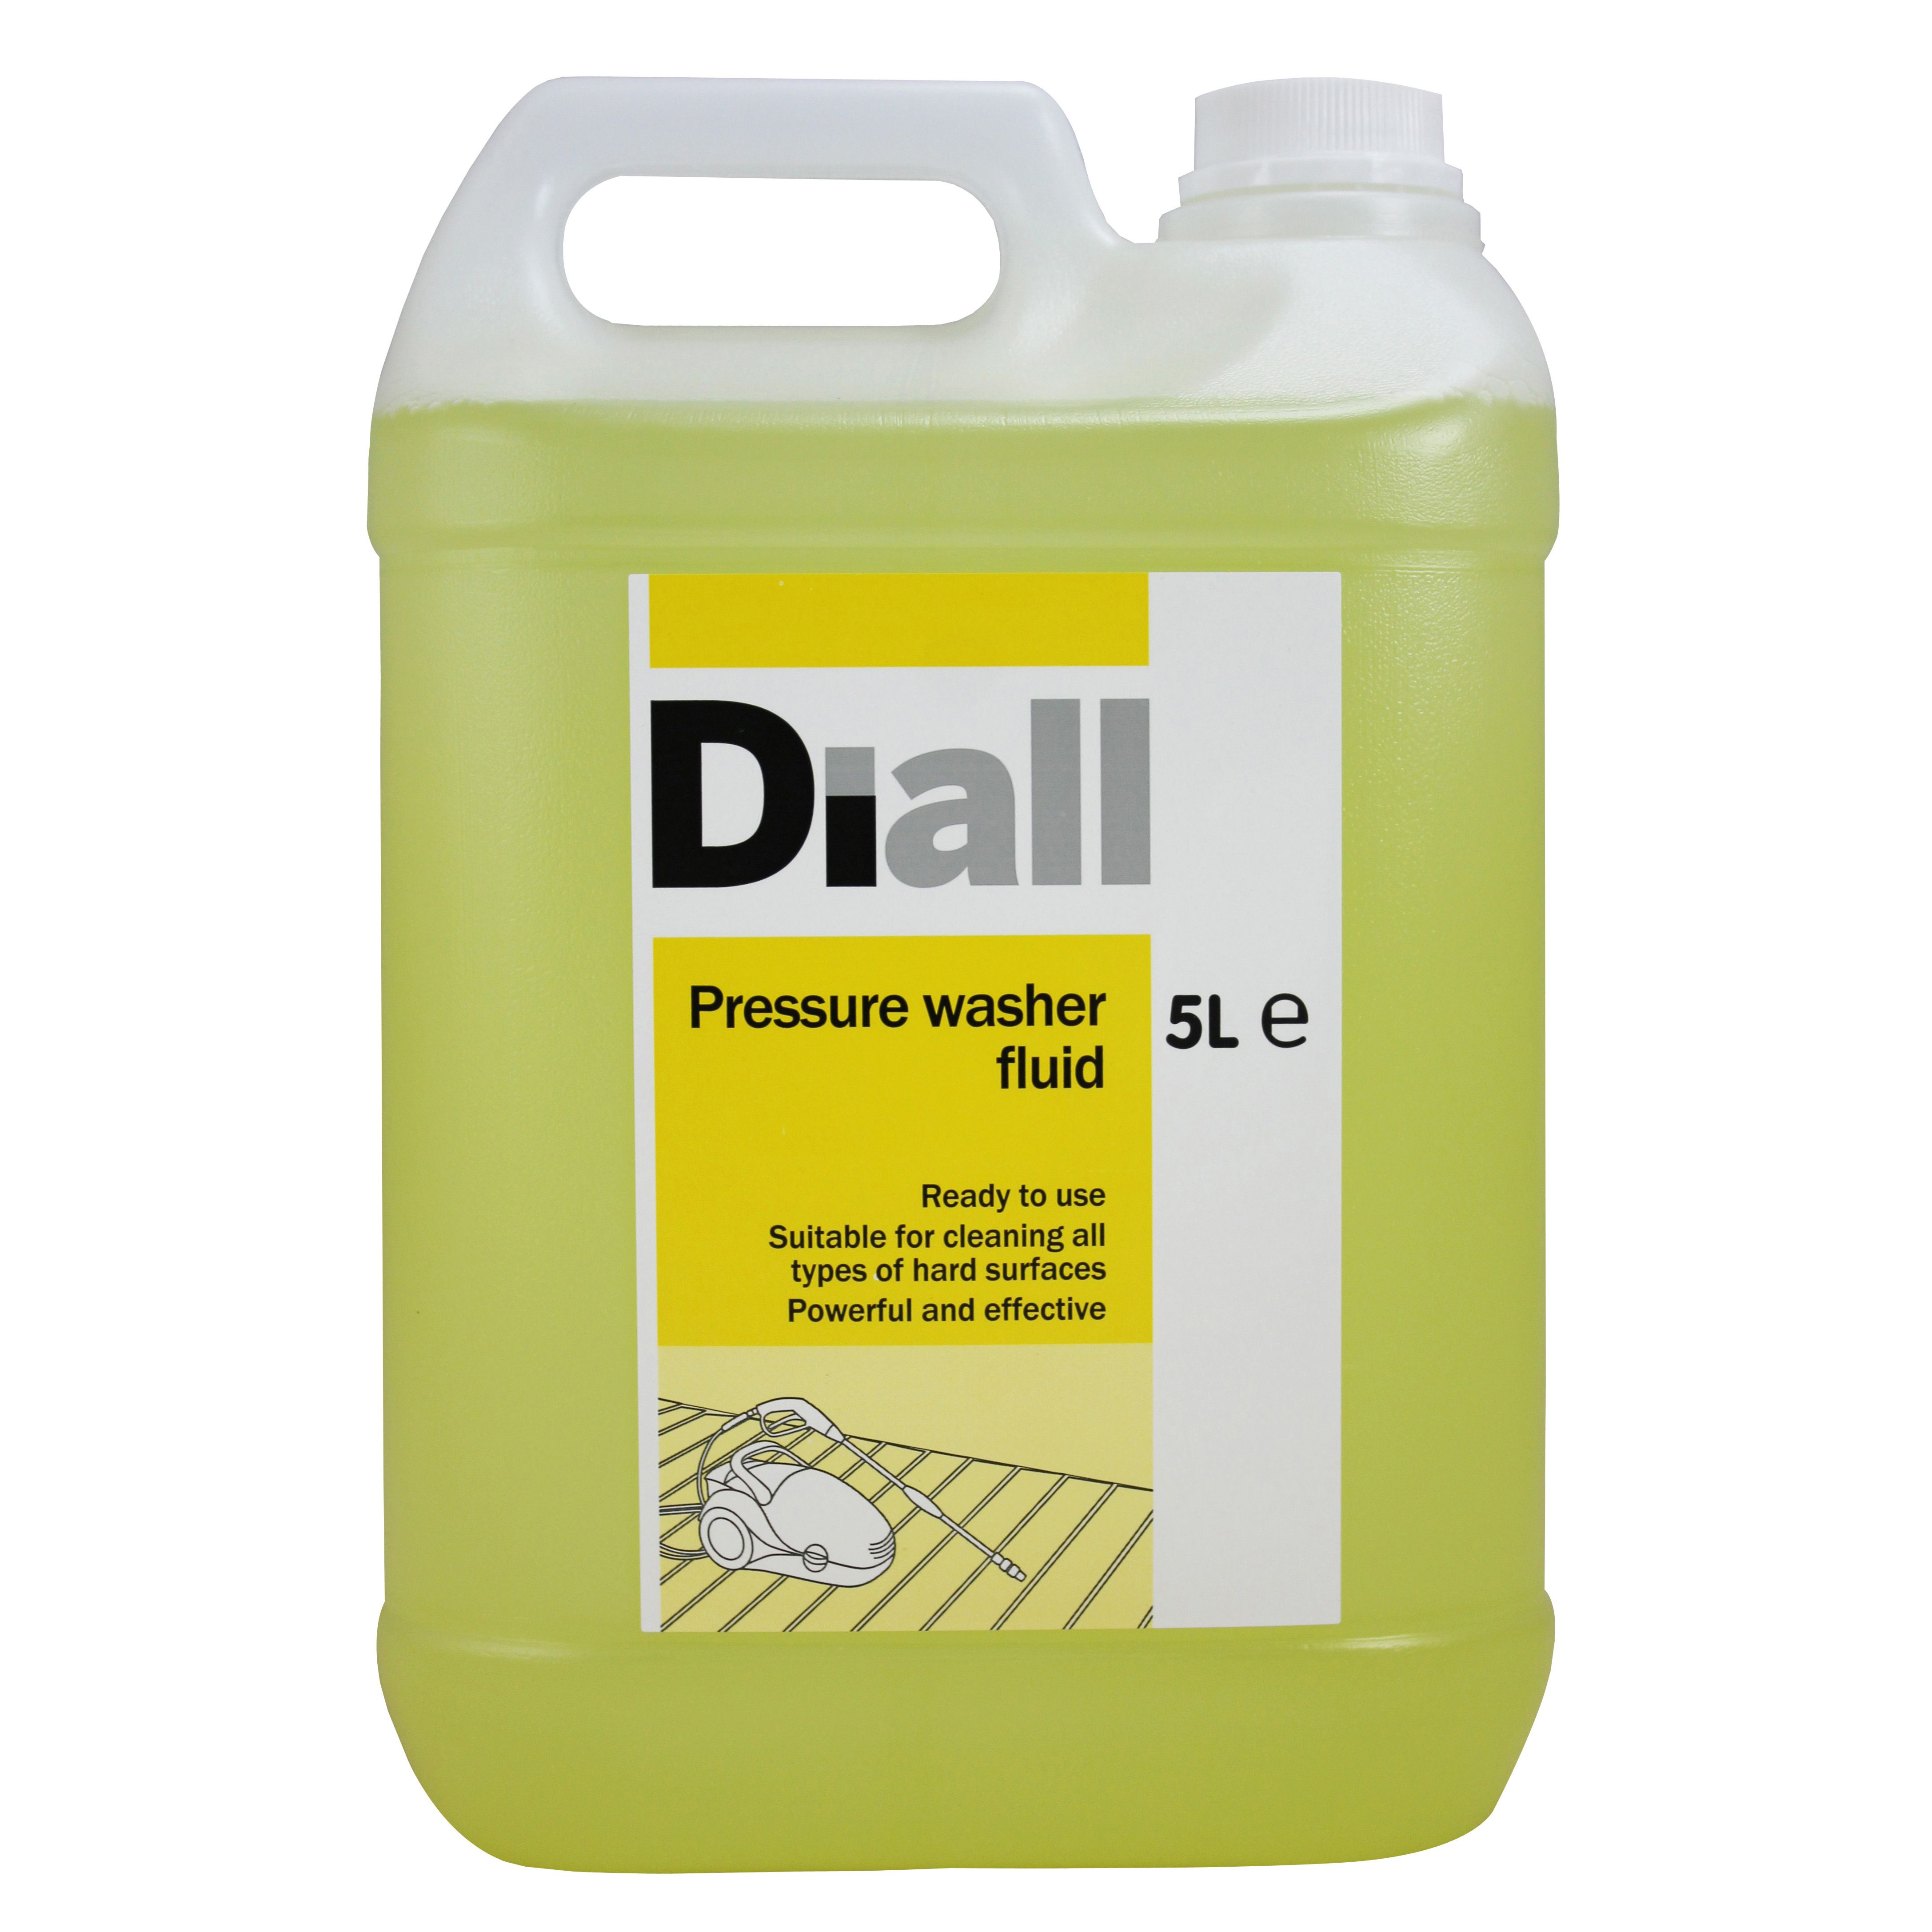 Diall Concentrated Liquid Sugar soap, 0.5L